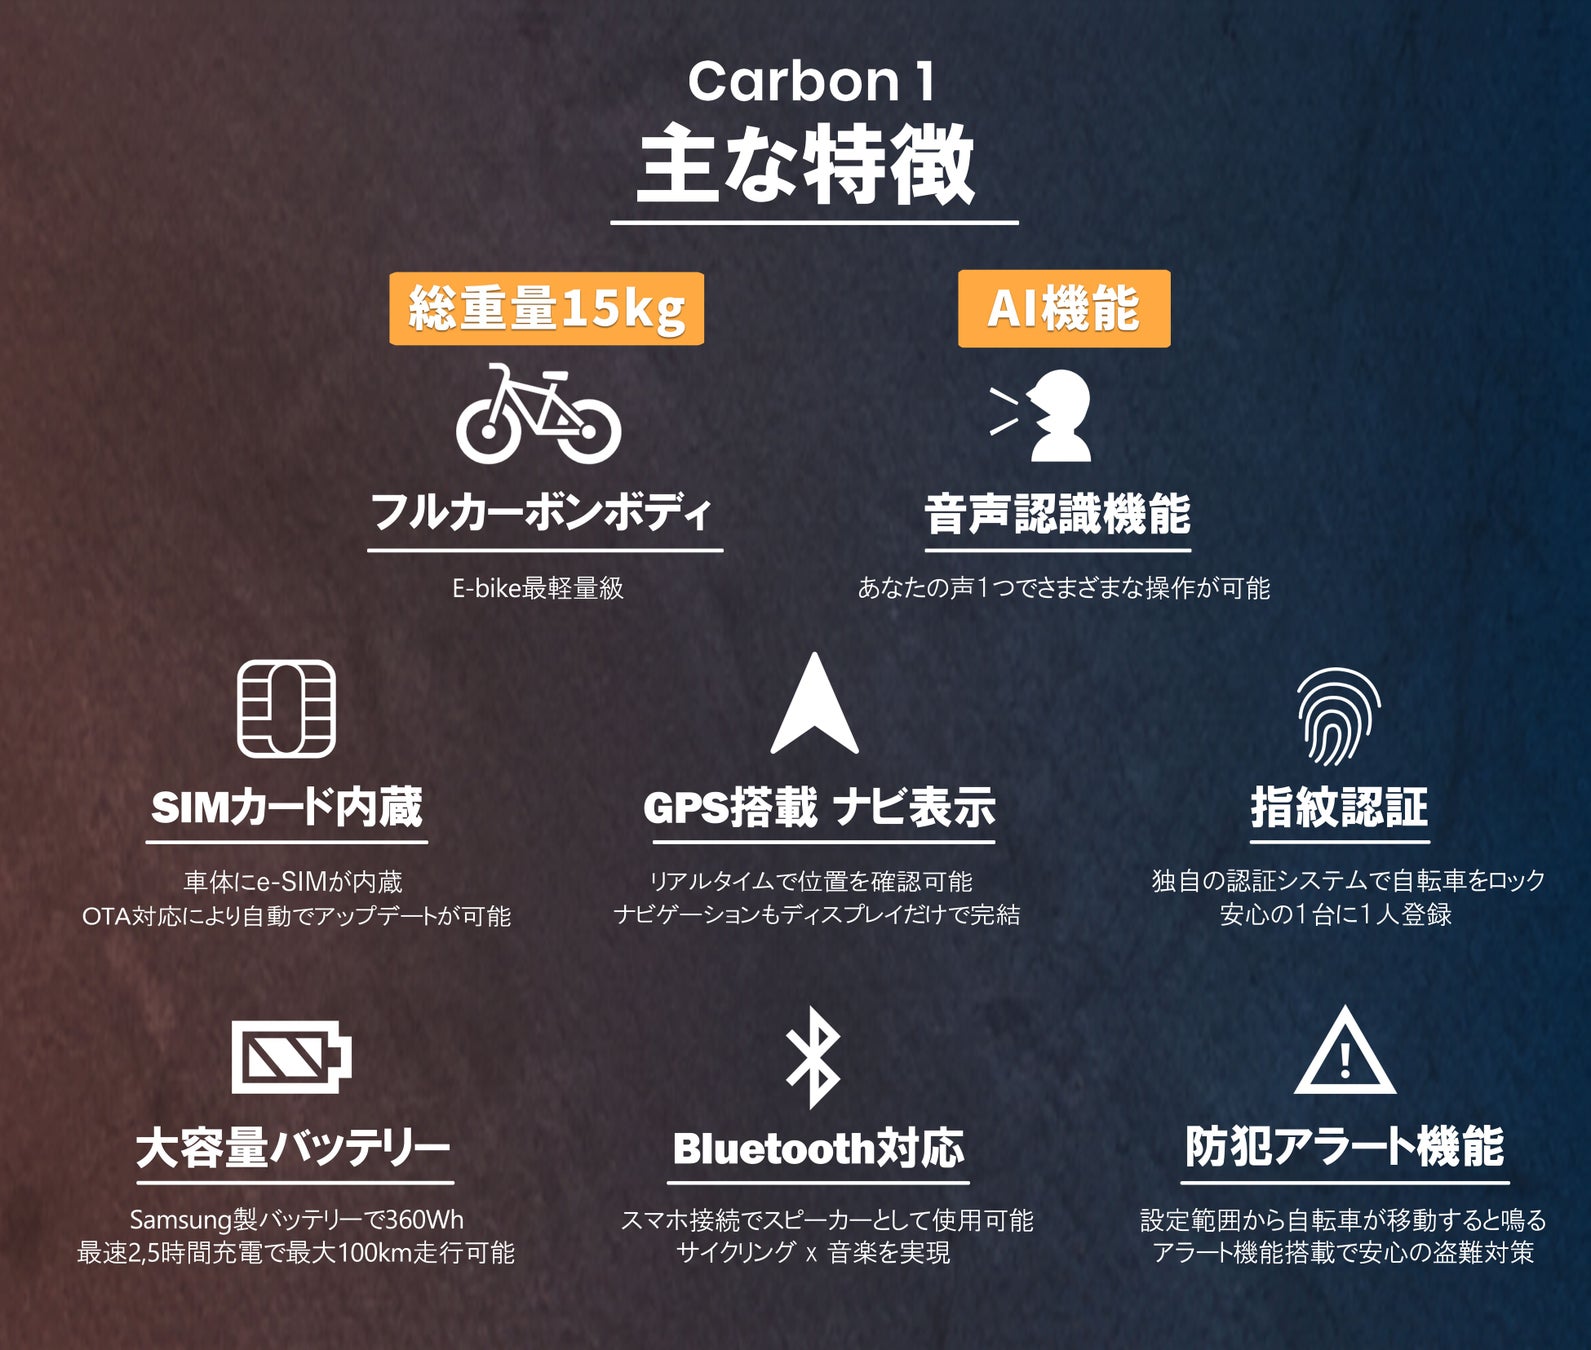 AI搭載E-bike『URTOPIA Carbon1』が本日4月22日(月)に目標達成！